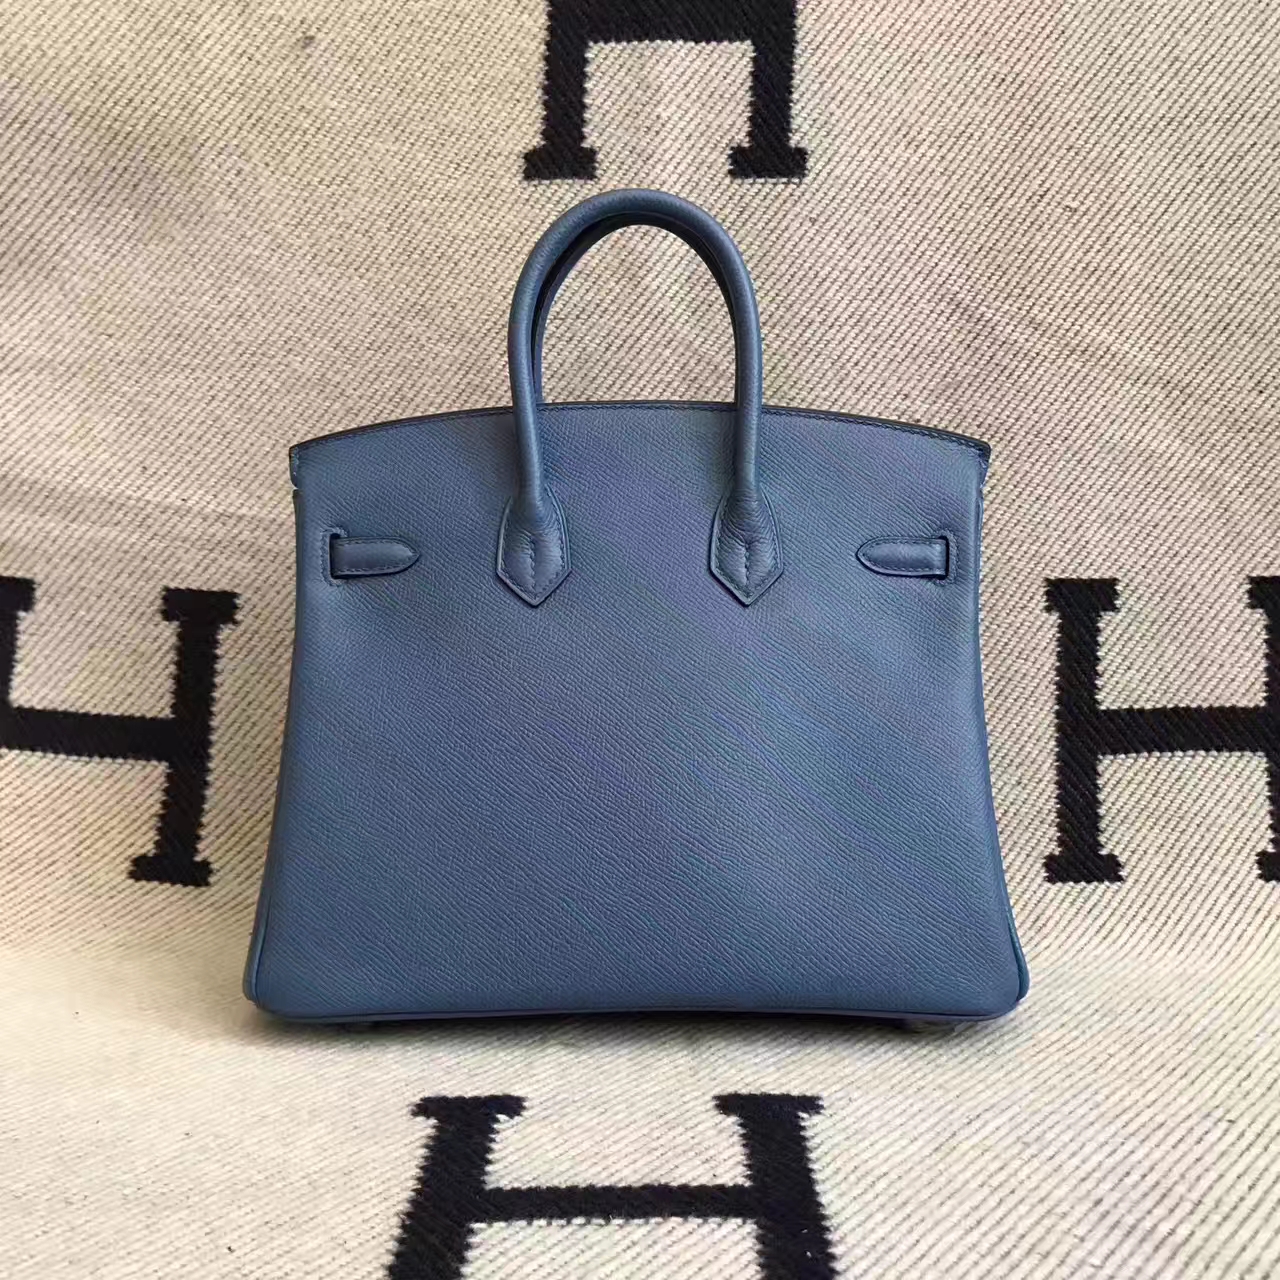 Luxury Hermes Birkin Bag 25cm in 2R Agate Blue Epsom Leather